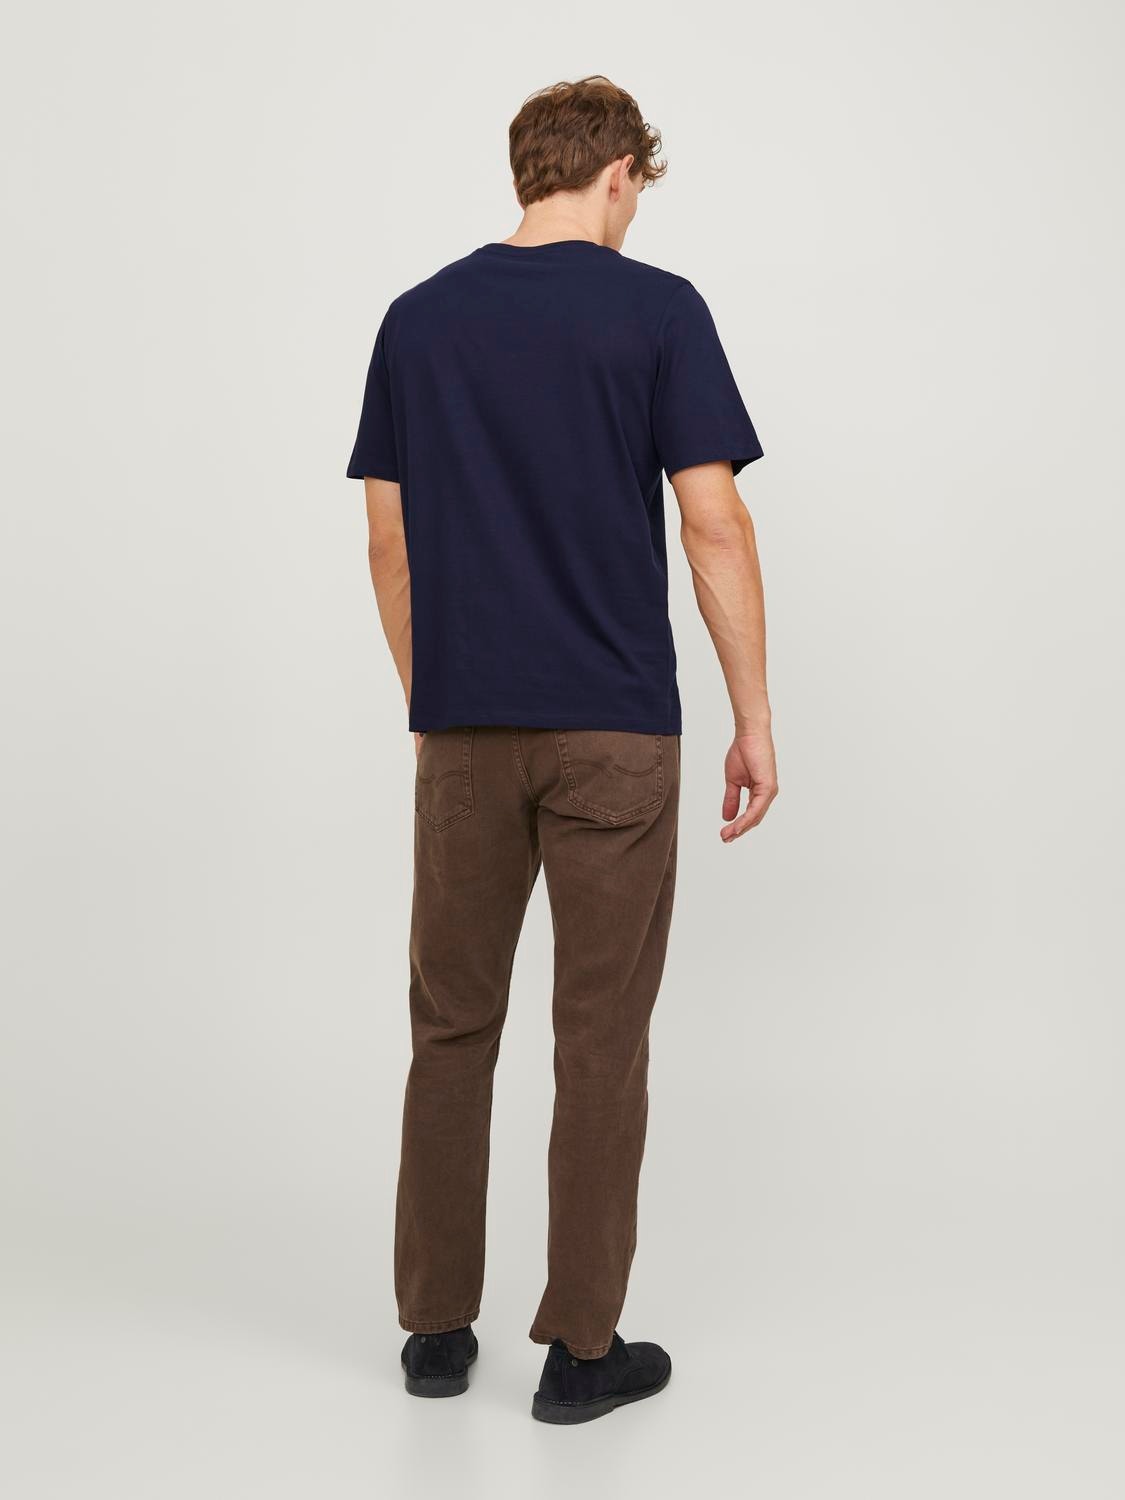 Jack & Jones Basic Rundhals T-shirt -Navy Blazer - 12245087